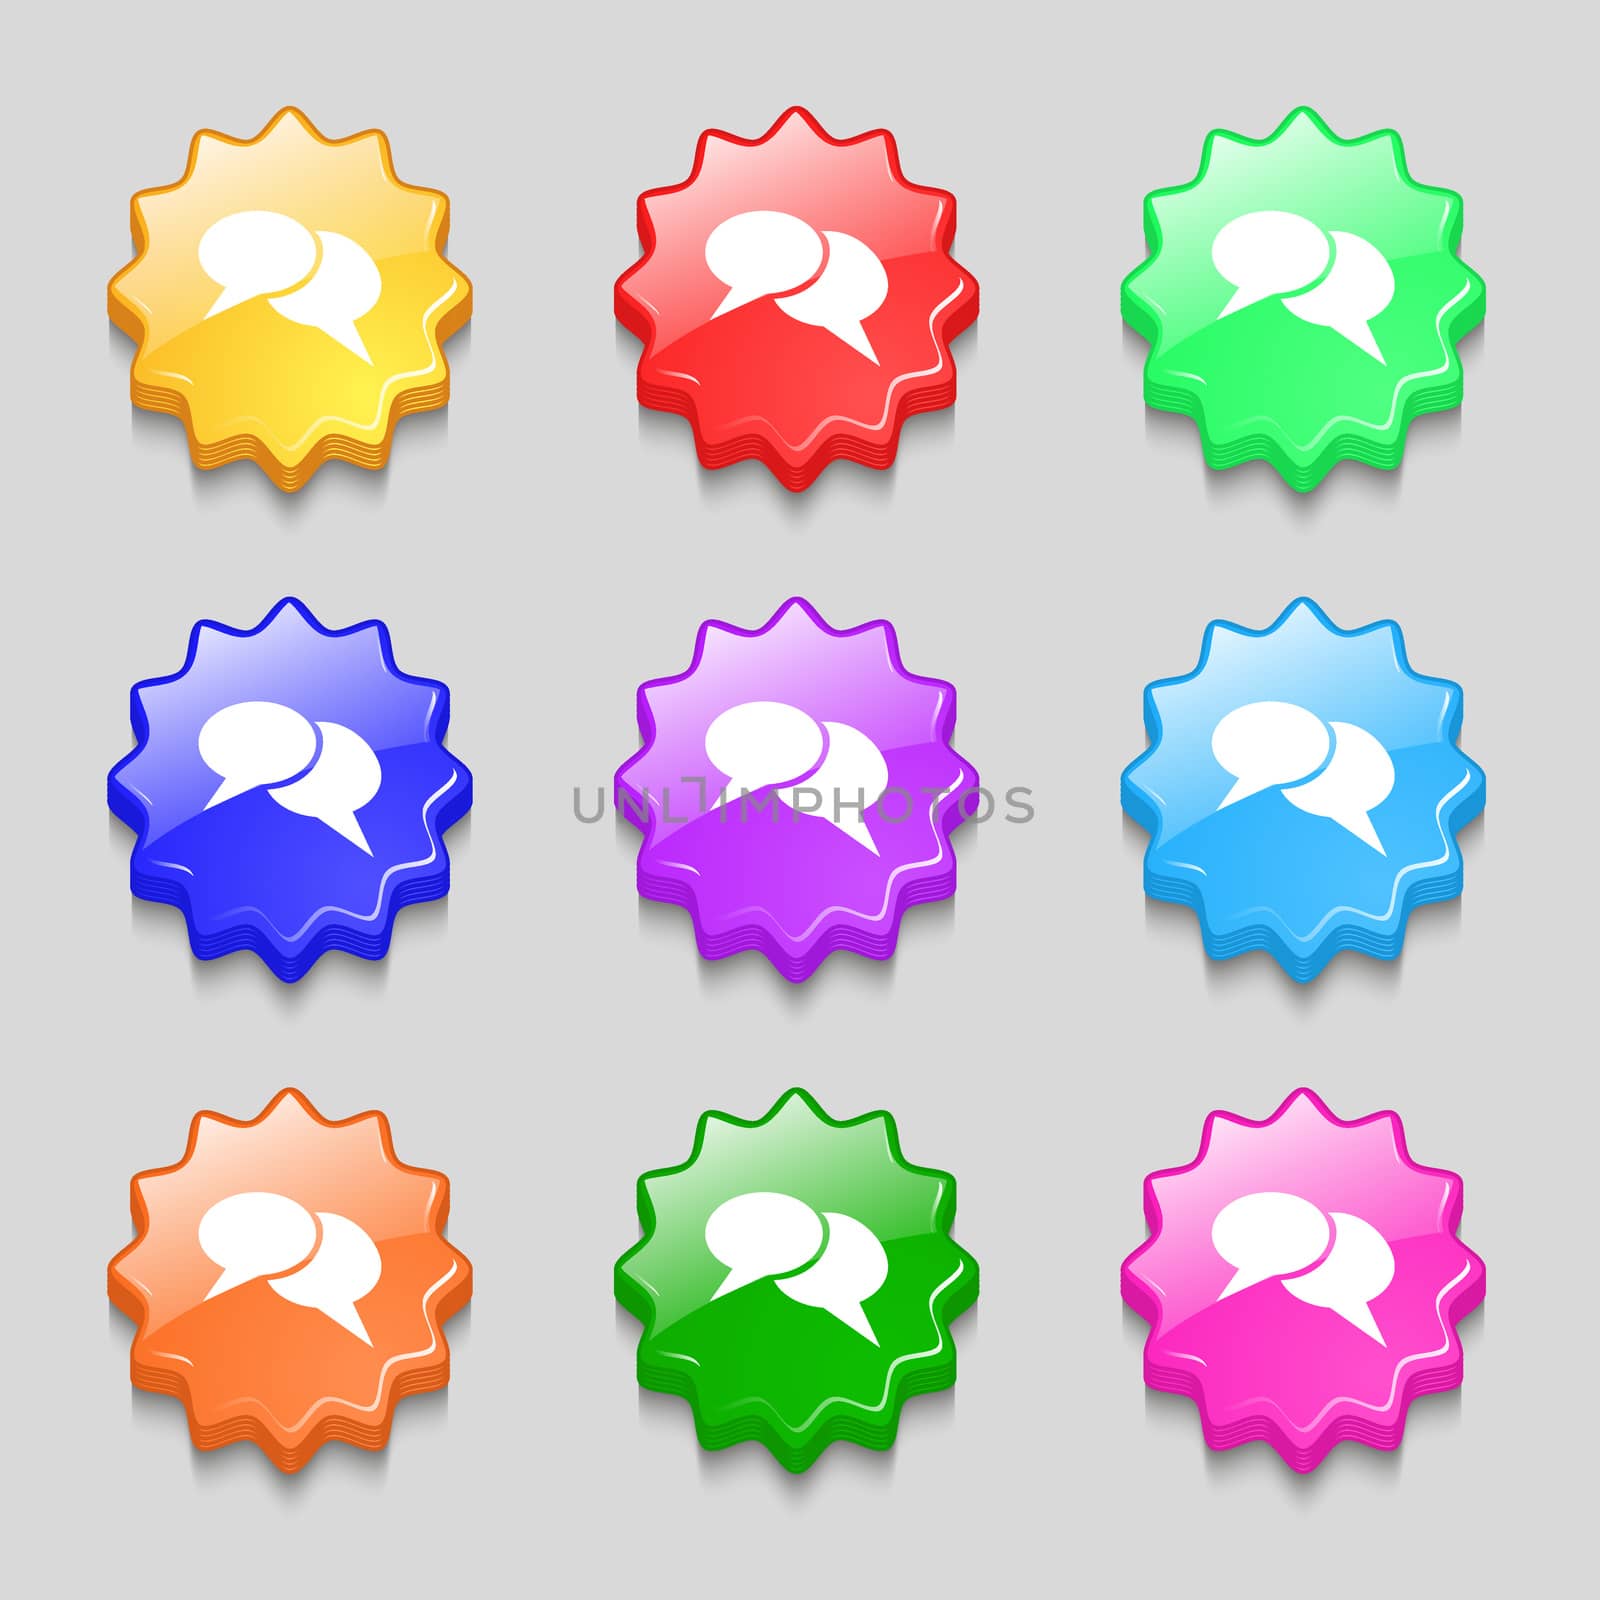 Speech bubble icons. Think cloud symbols. Symbols on nine wavy colourful buttons.  by serhii_lohvyniuk